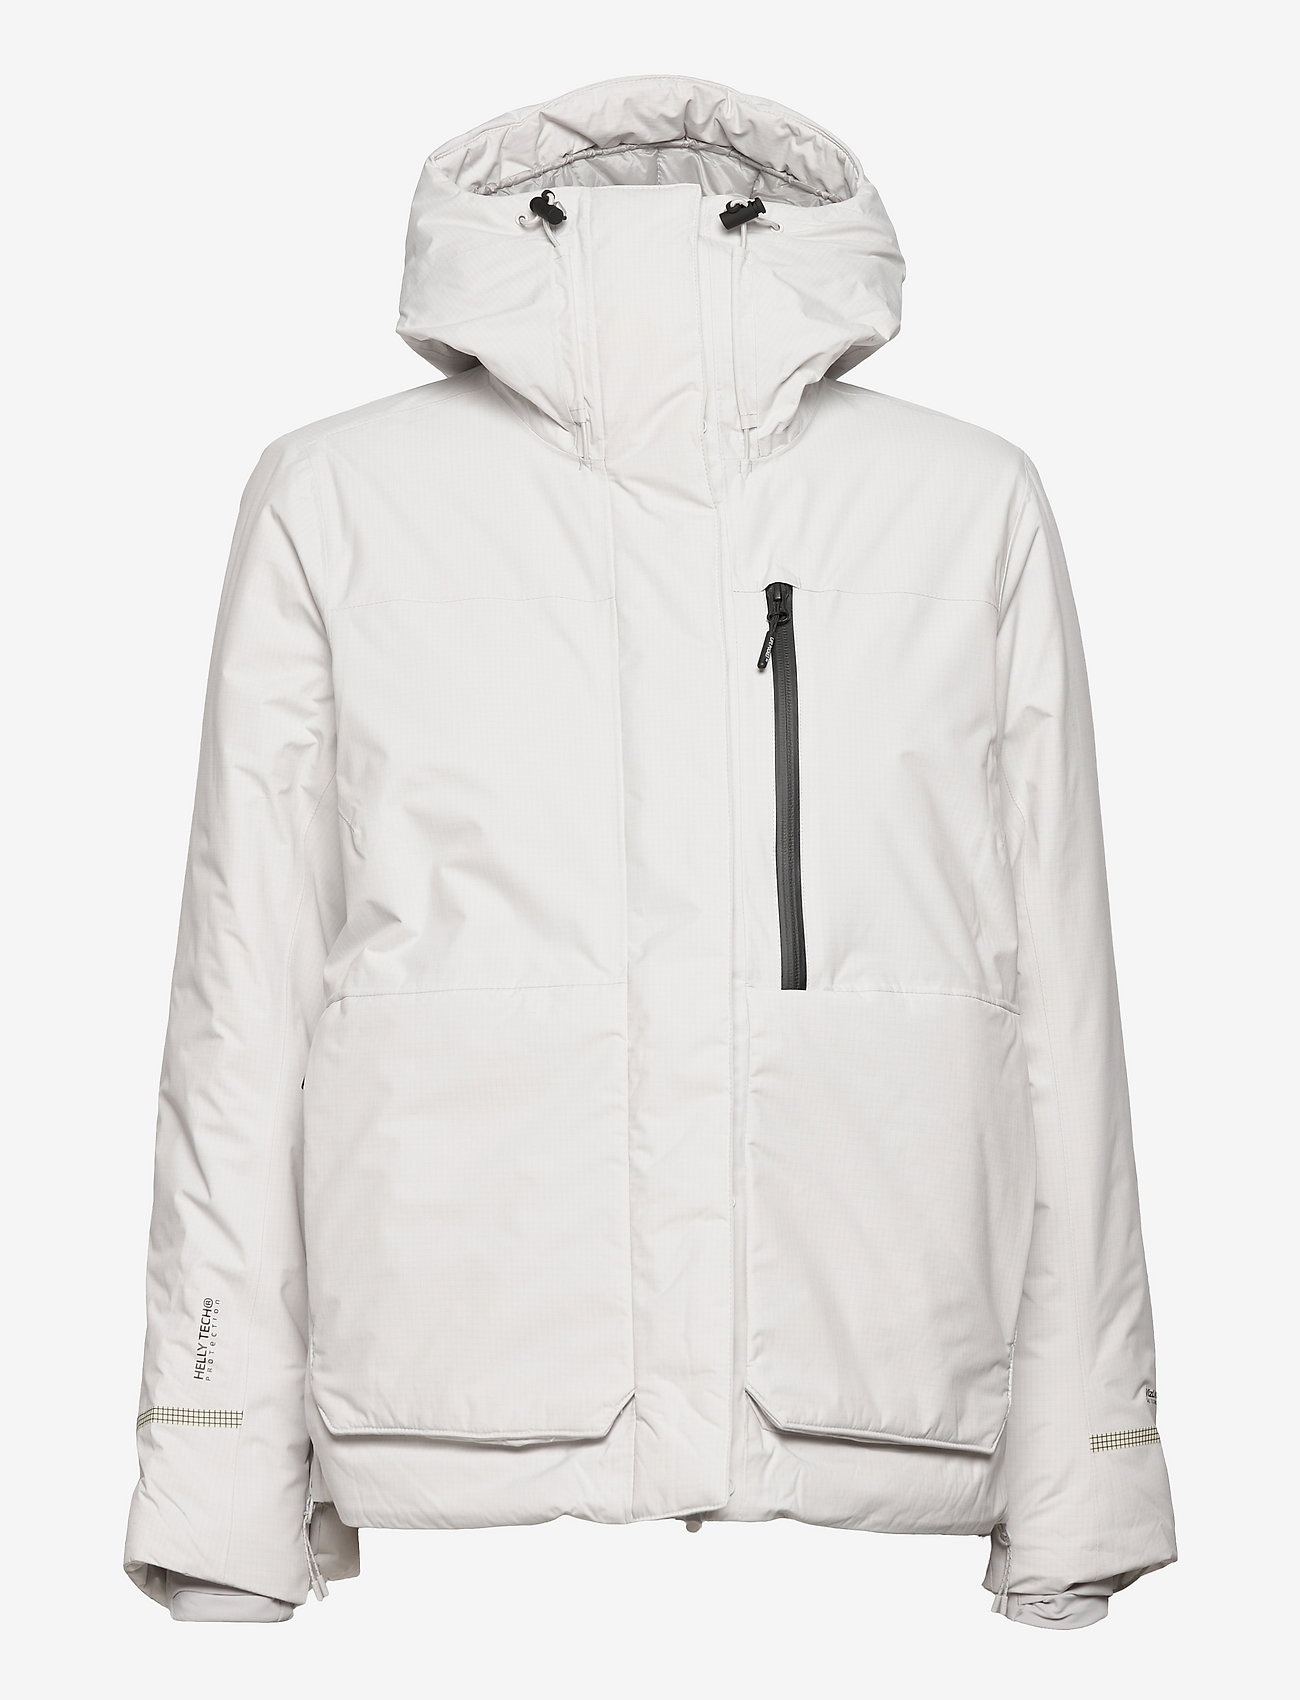 Tommy Hilfiger light jacket WOMEN FASHION Jackets Light jacket discount 77% Gray S 